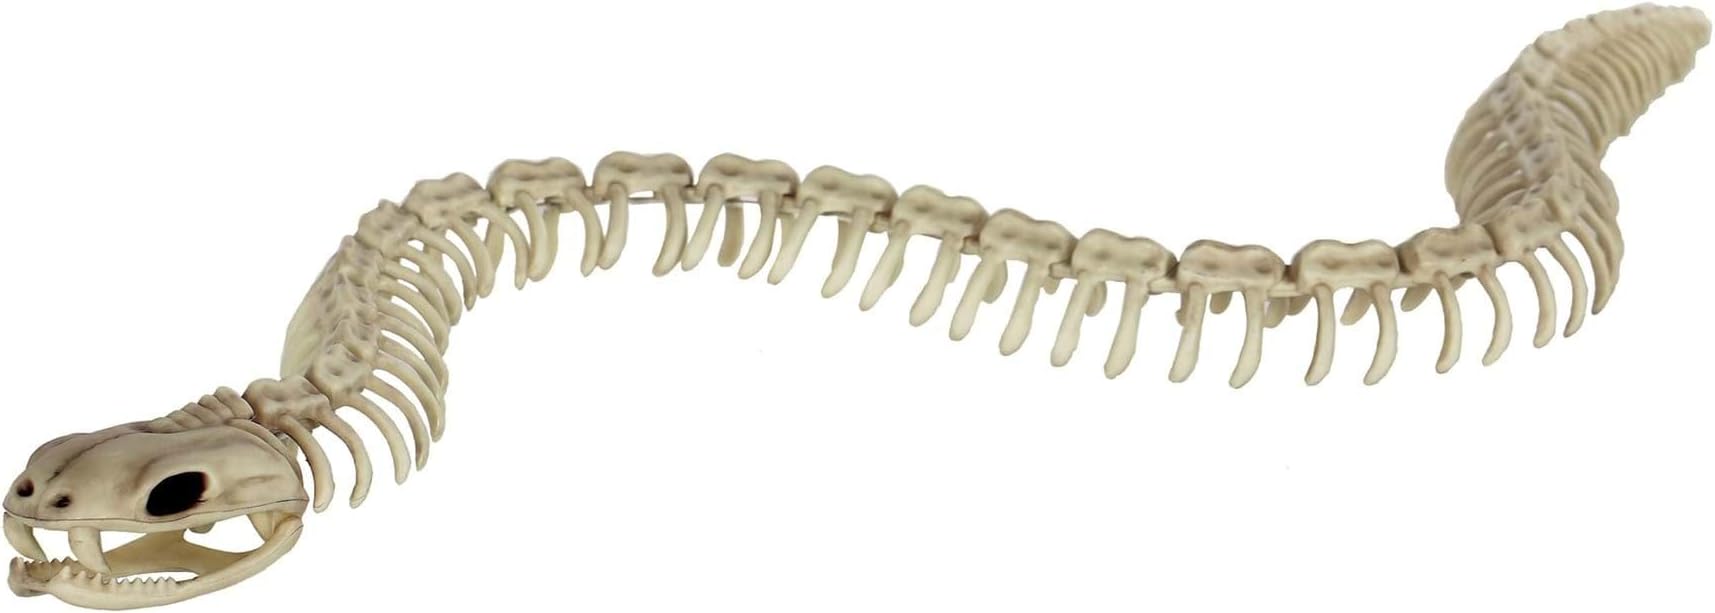 Skeleton Snake 36IN